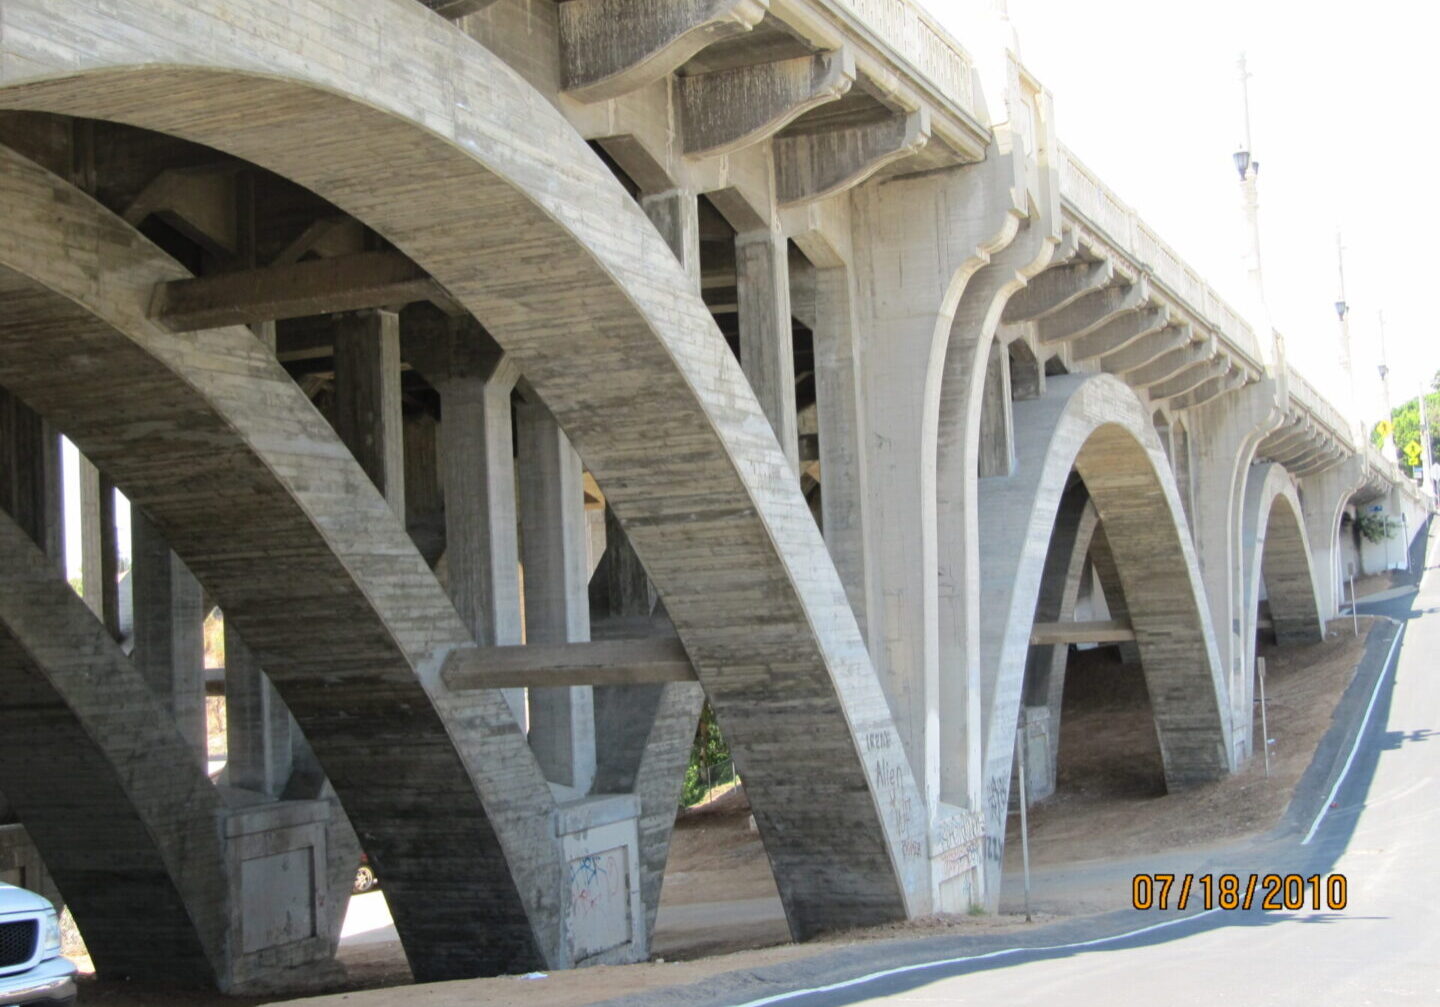 Historic Fourth Street Bridge over Lorena Seismic Retrofit - City of Los Angeles